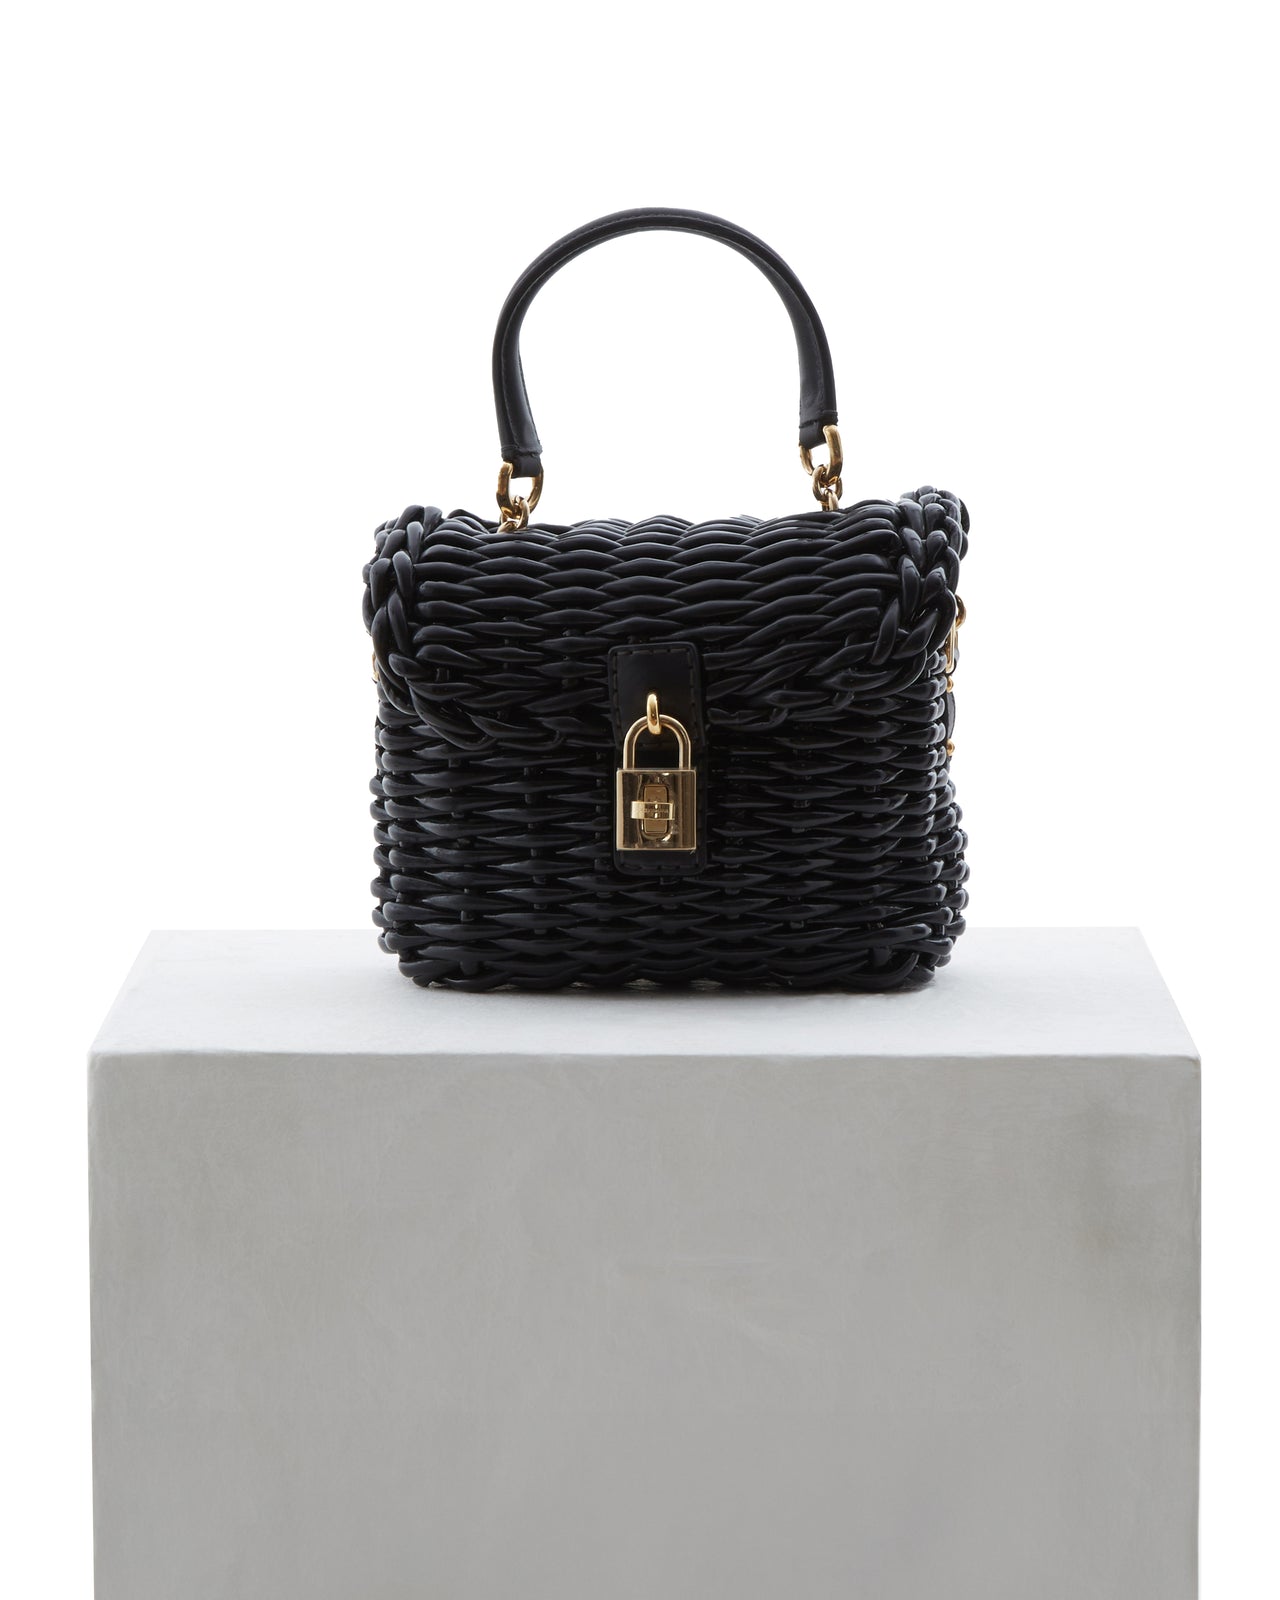 Dolce & Gabbana S/S 2012  Black wicker handbag